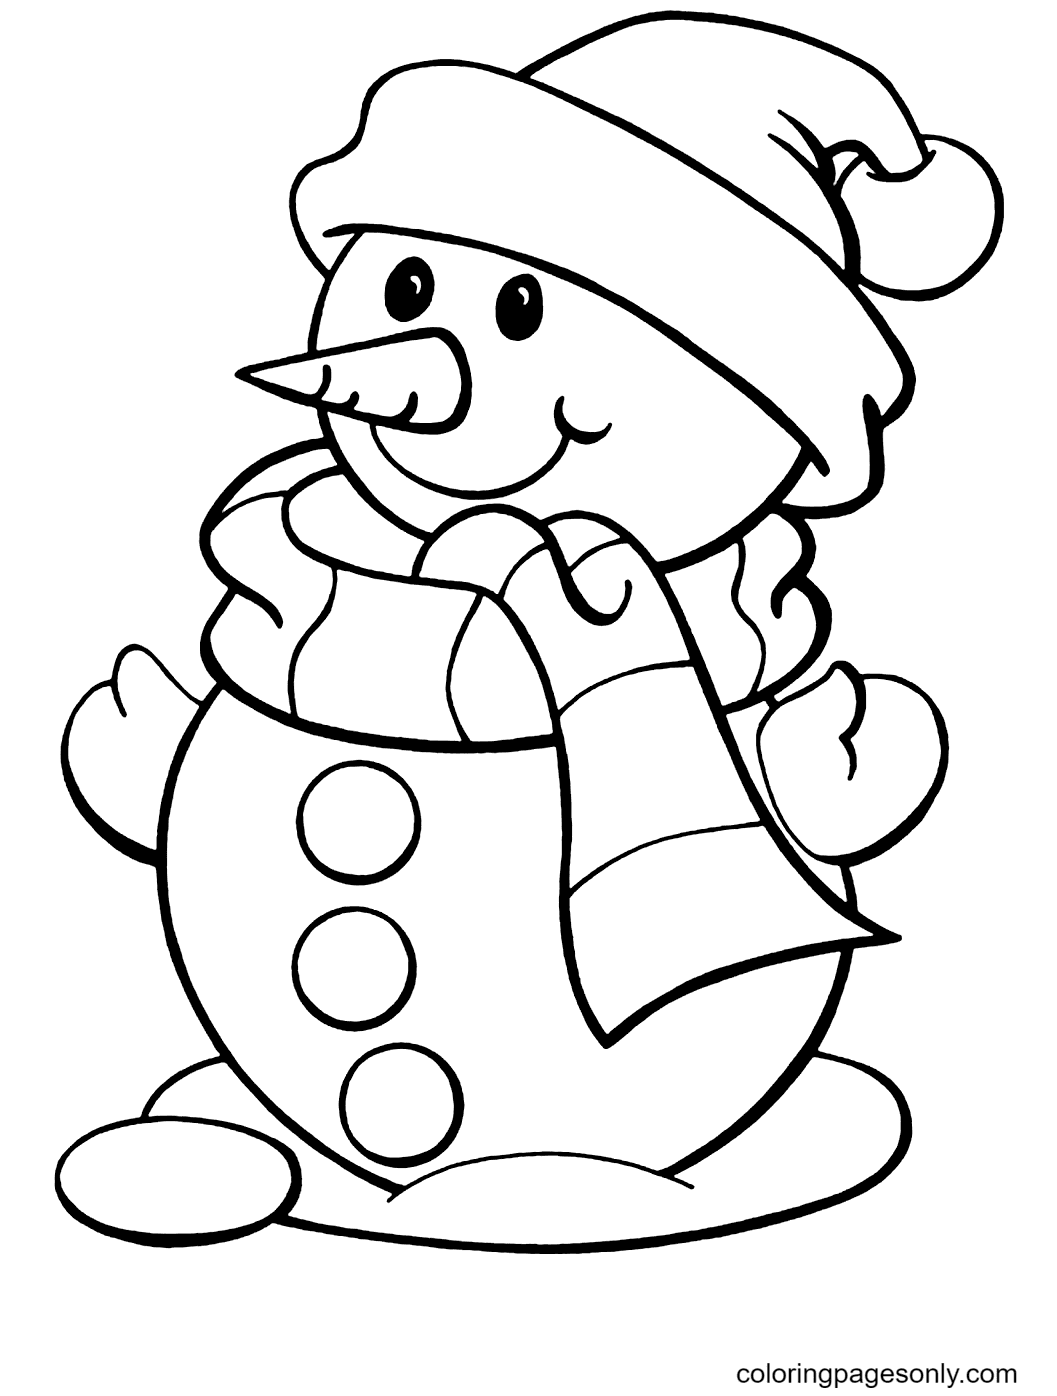 Desenho de boneco de neve bonito para colorir